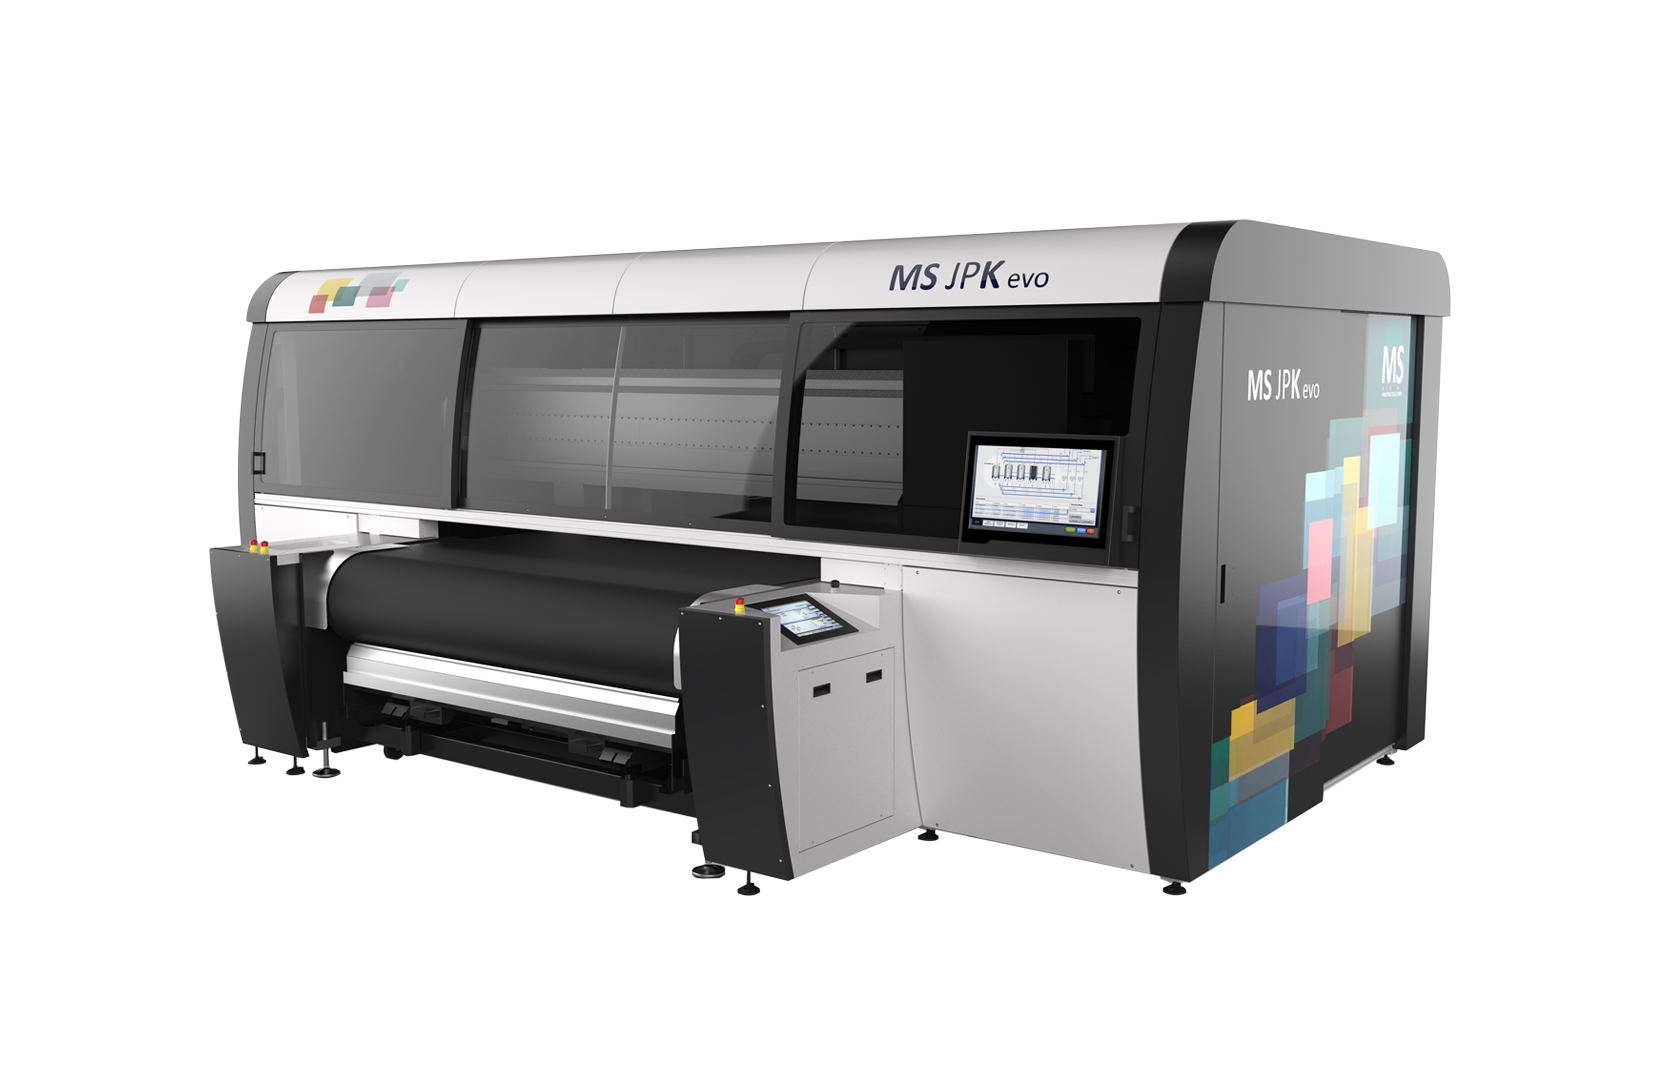 Inkjet Textile Printer-Products-Industrial Inkjet